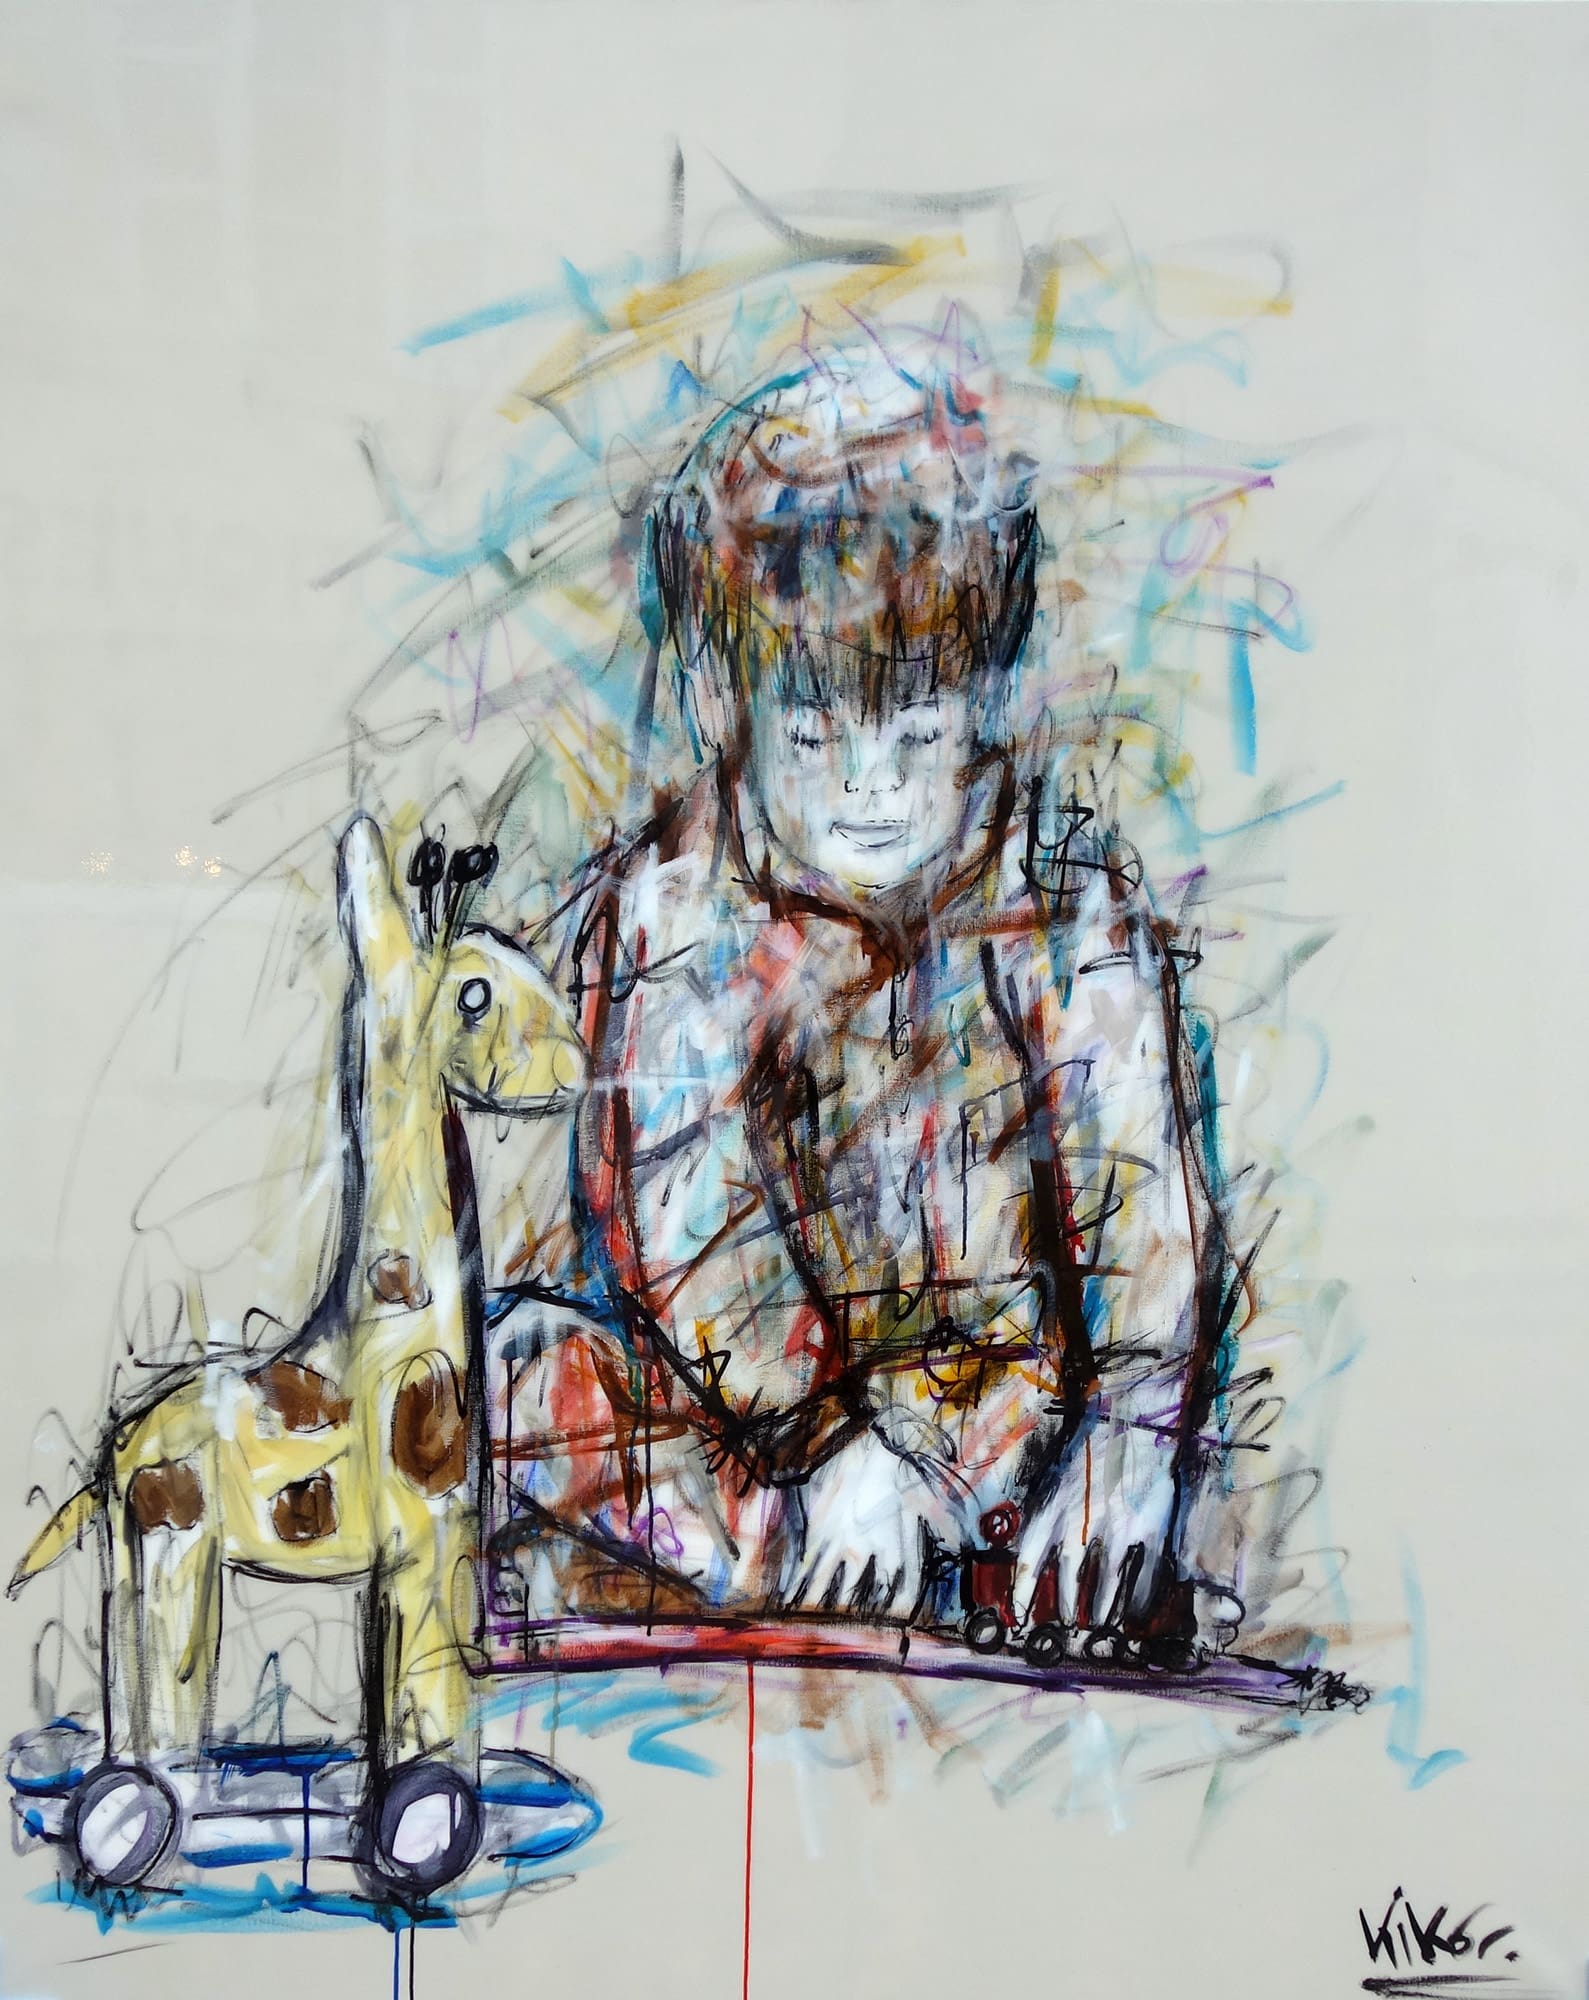 Peinture d'un garçon et une girafe par Kiko